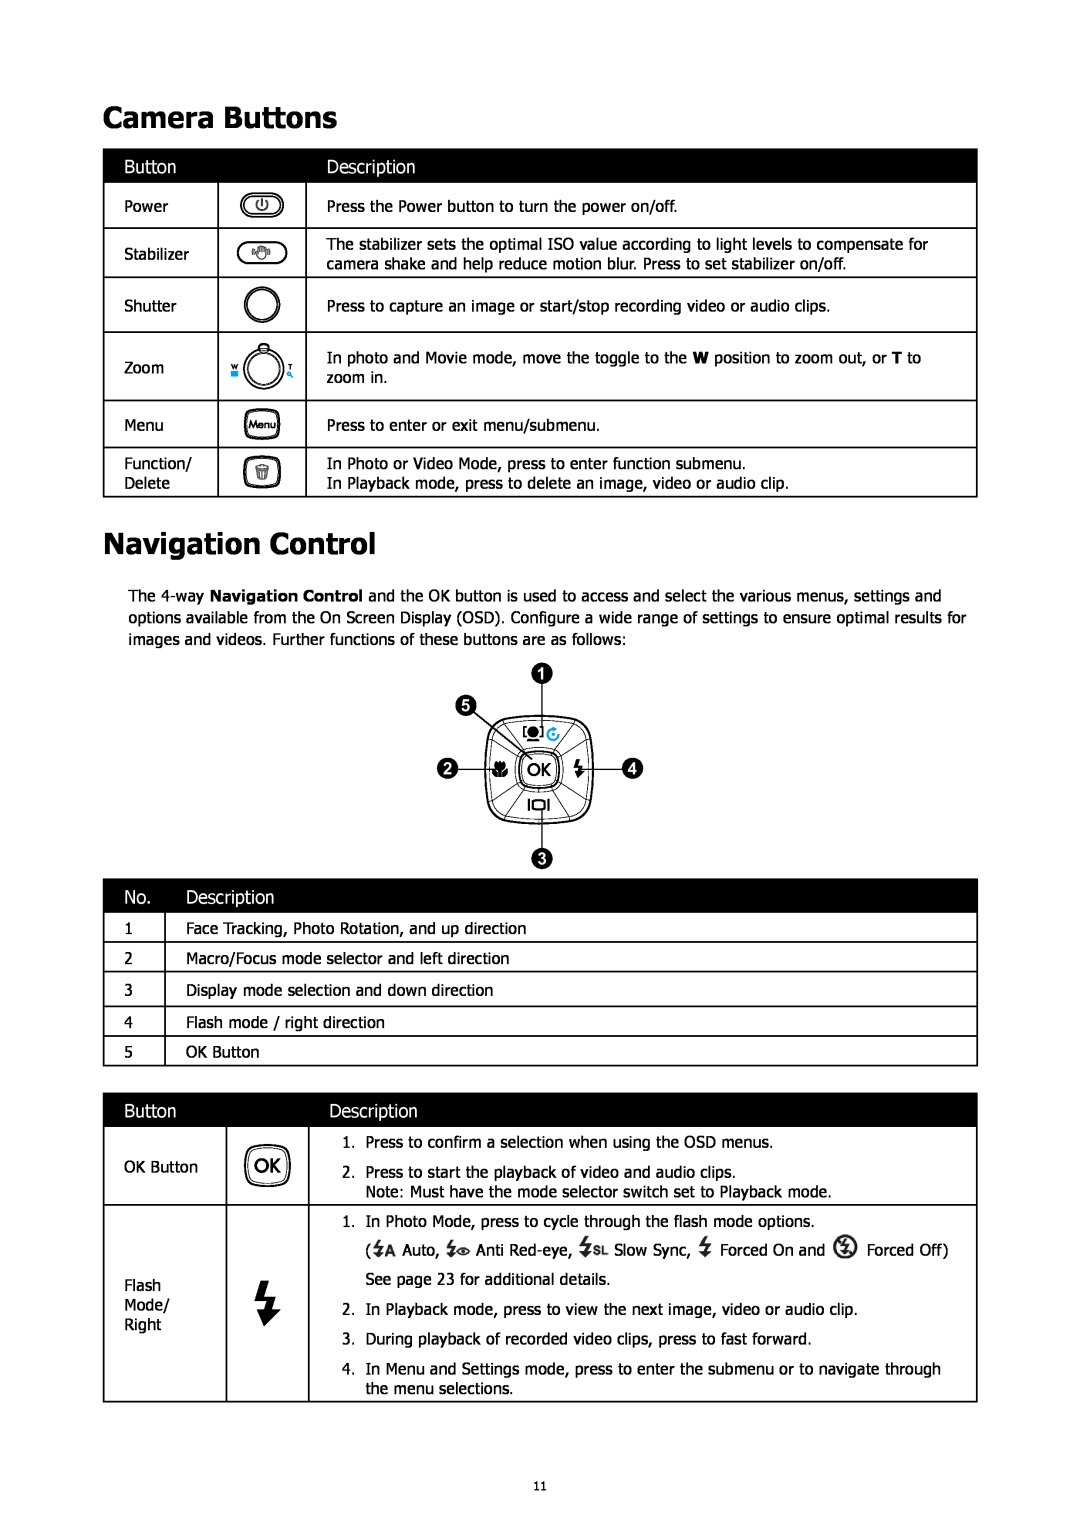 HP SW450 manual Camera Buttons, Navigation Control, Description 